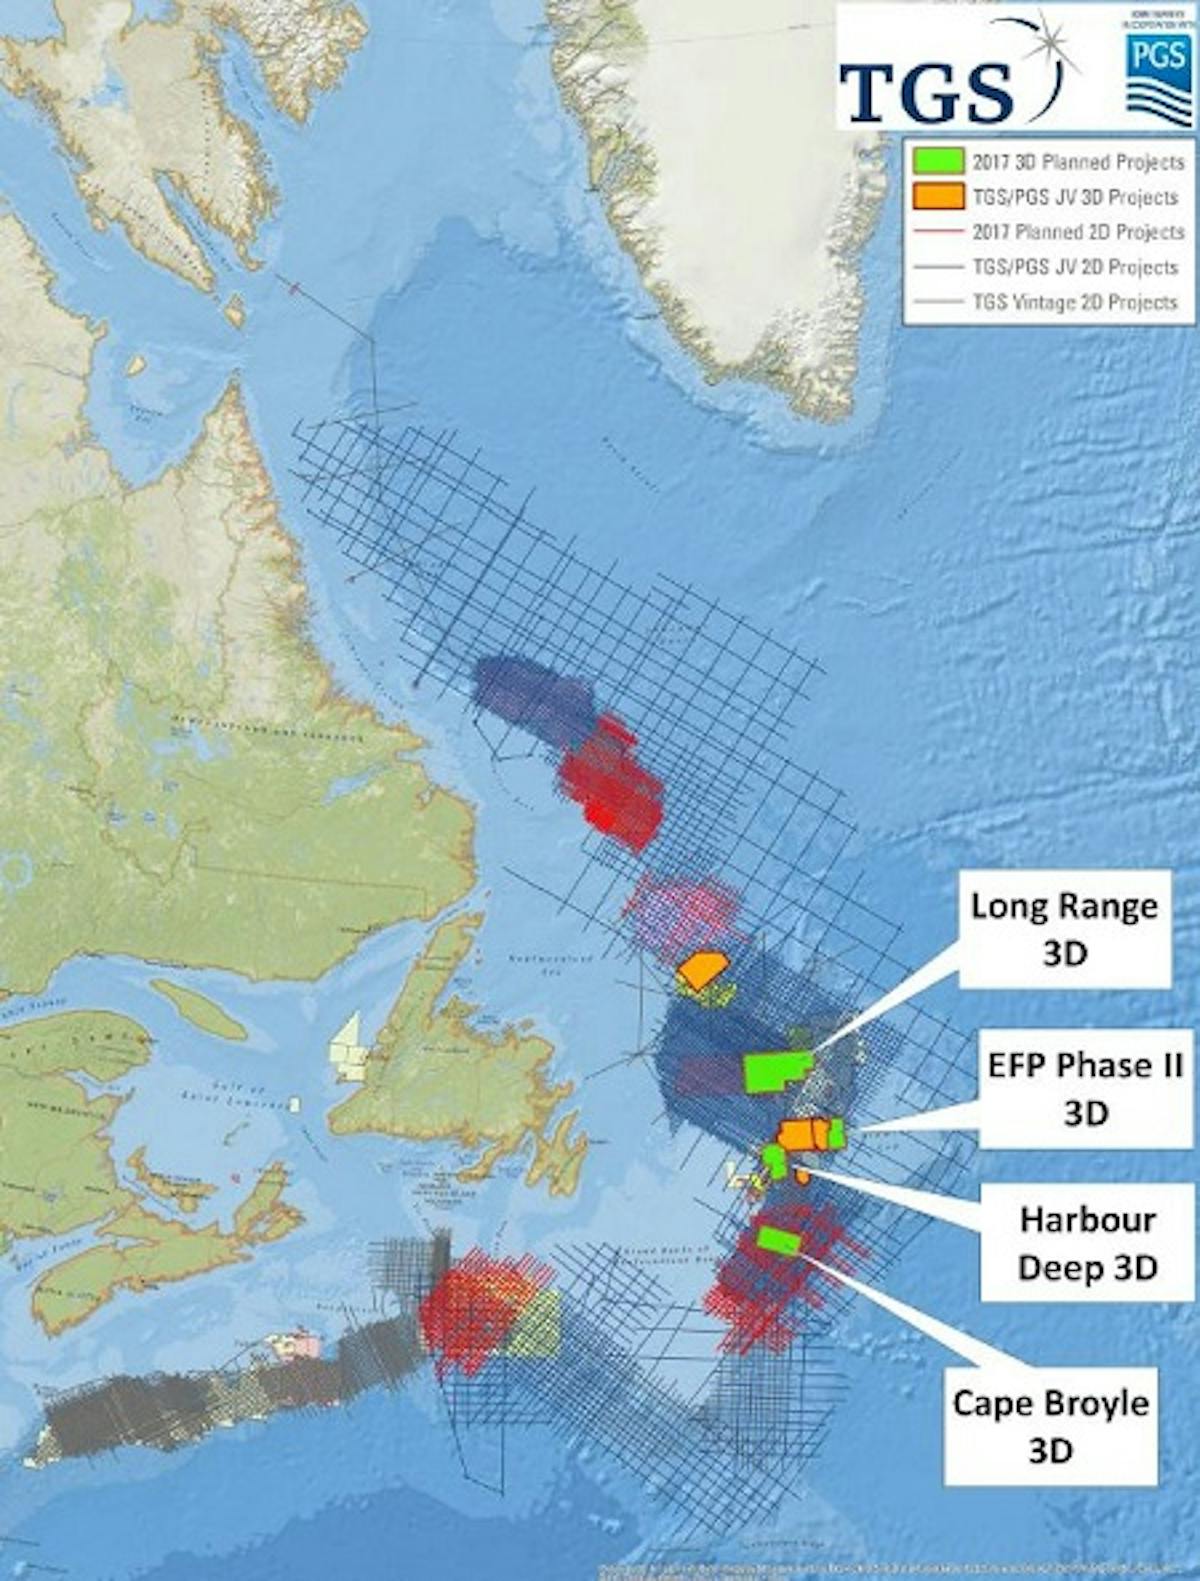 TGS and PGS 3D seismic surveys offshore Newfoundland